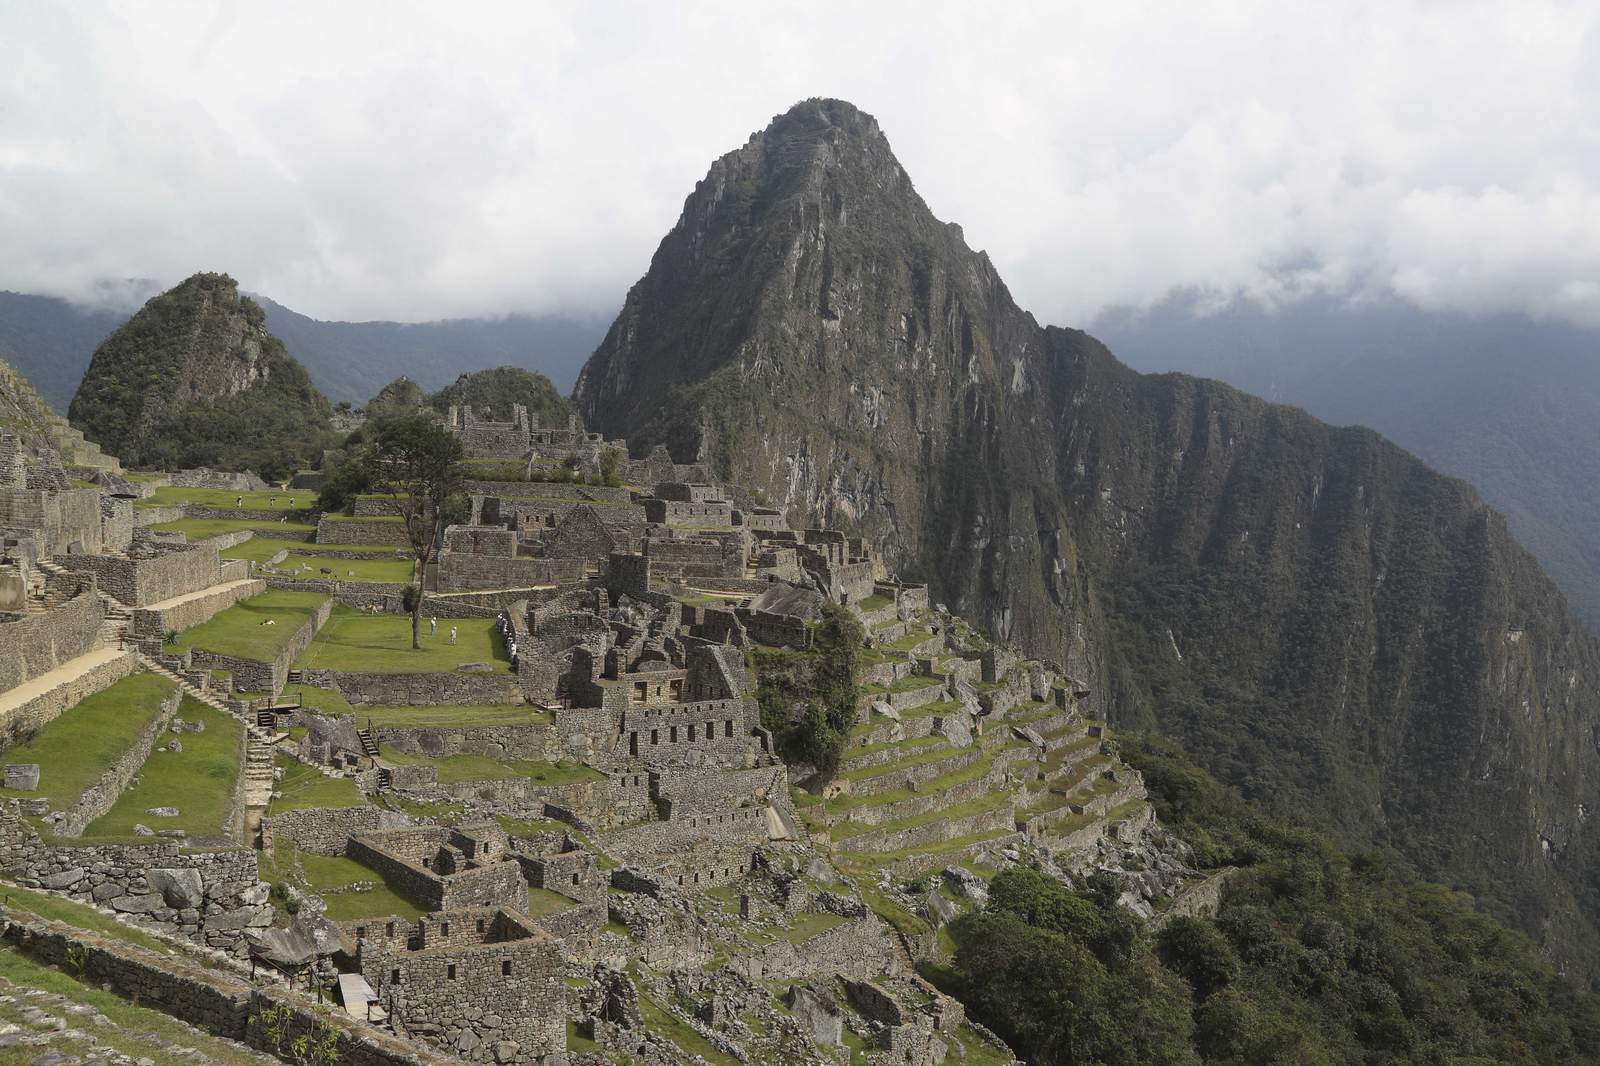 Peru's Machu Picchu reopening Sunday after pandemic closure